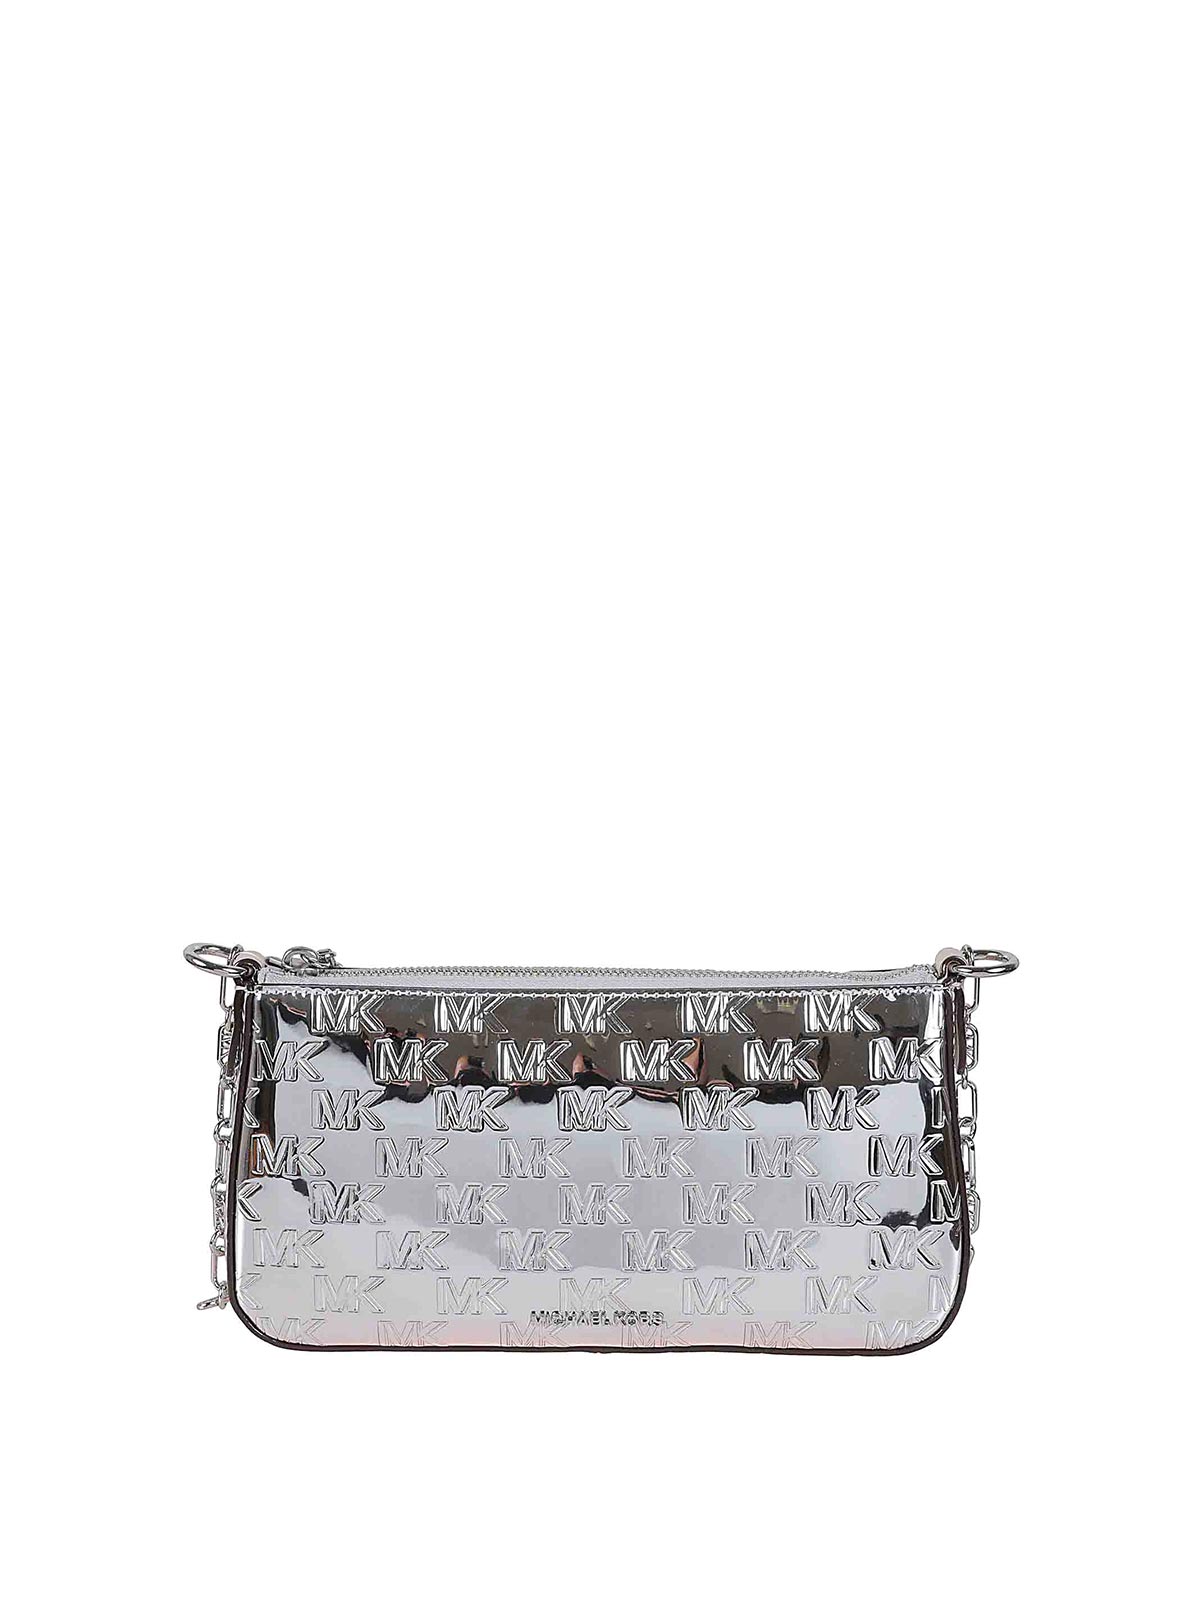 Michael Kors Empire Bag In Silver